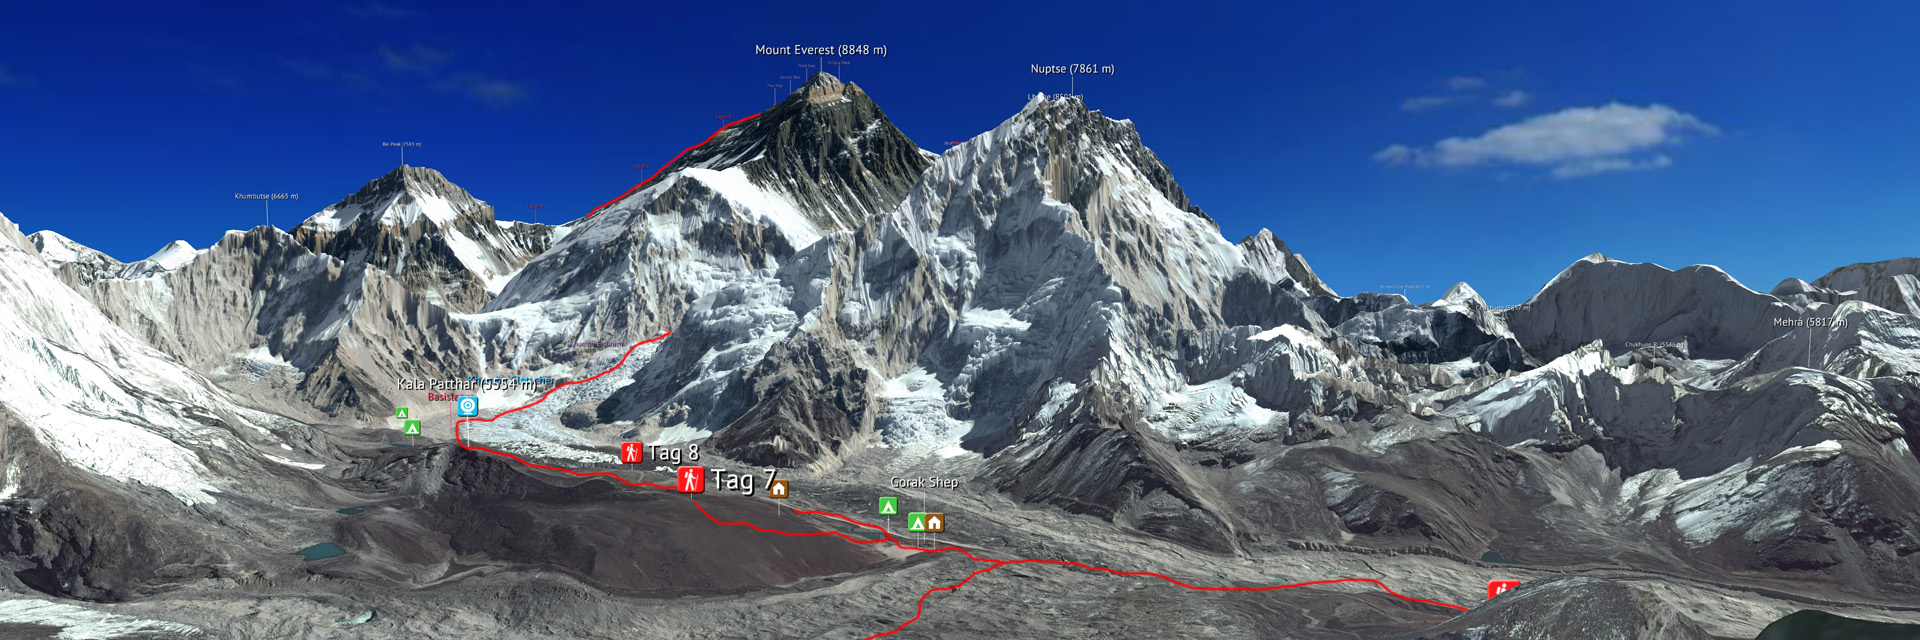 Mount Everest Backgrounds on Wallpapers Vista